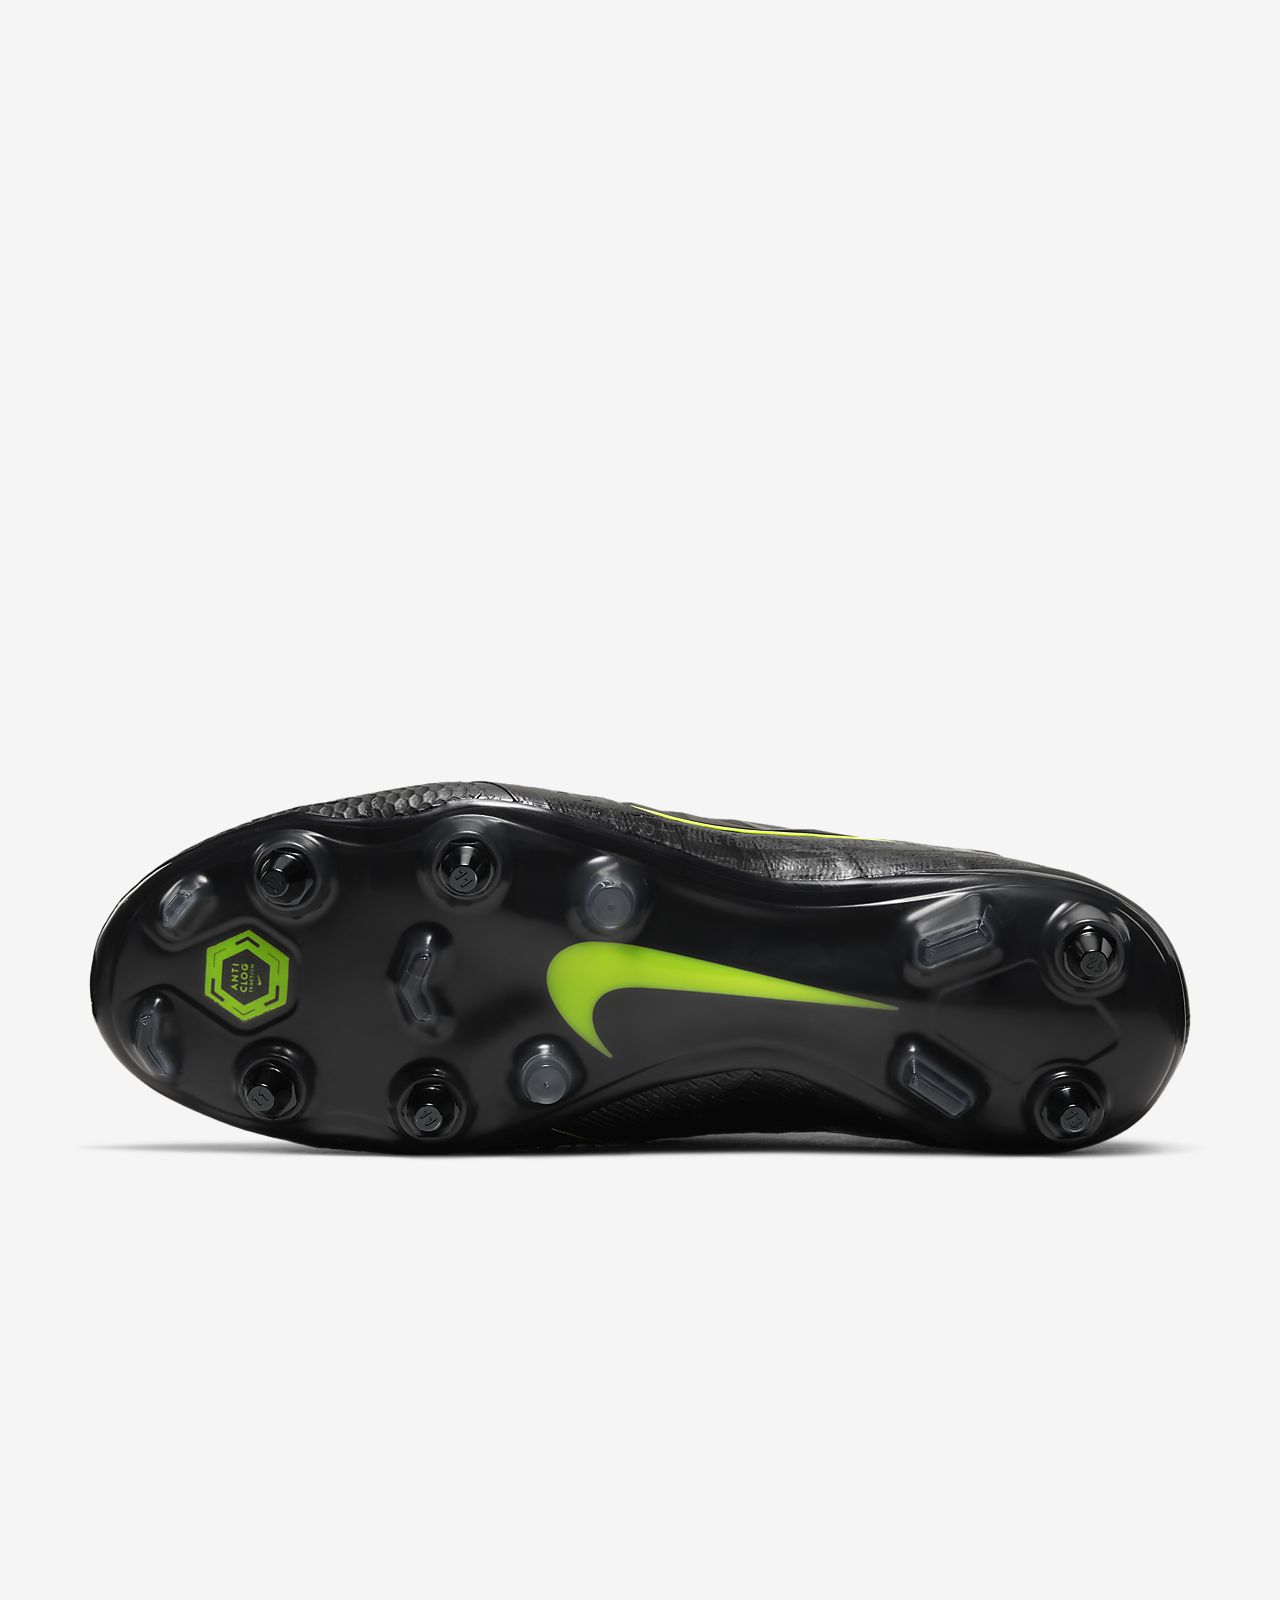 Nike Hypervenom PhantomX 3 Pro Indoor Soccer Shoes